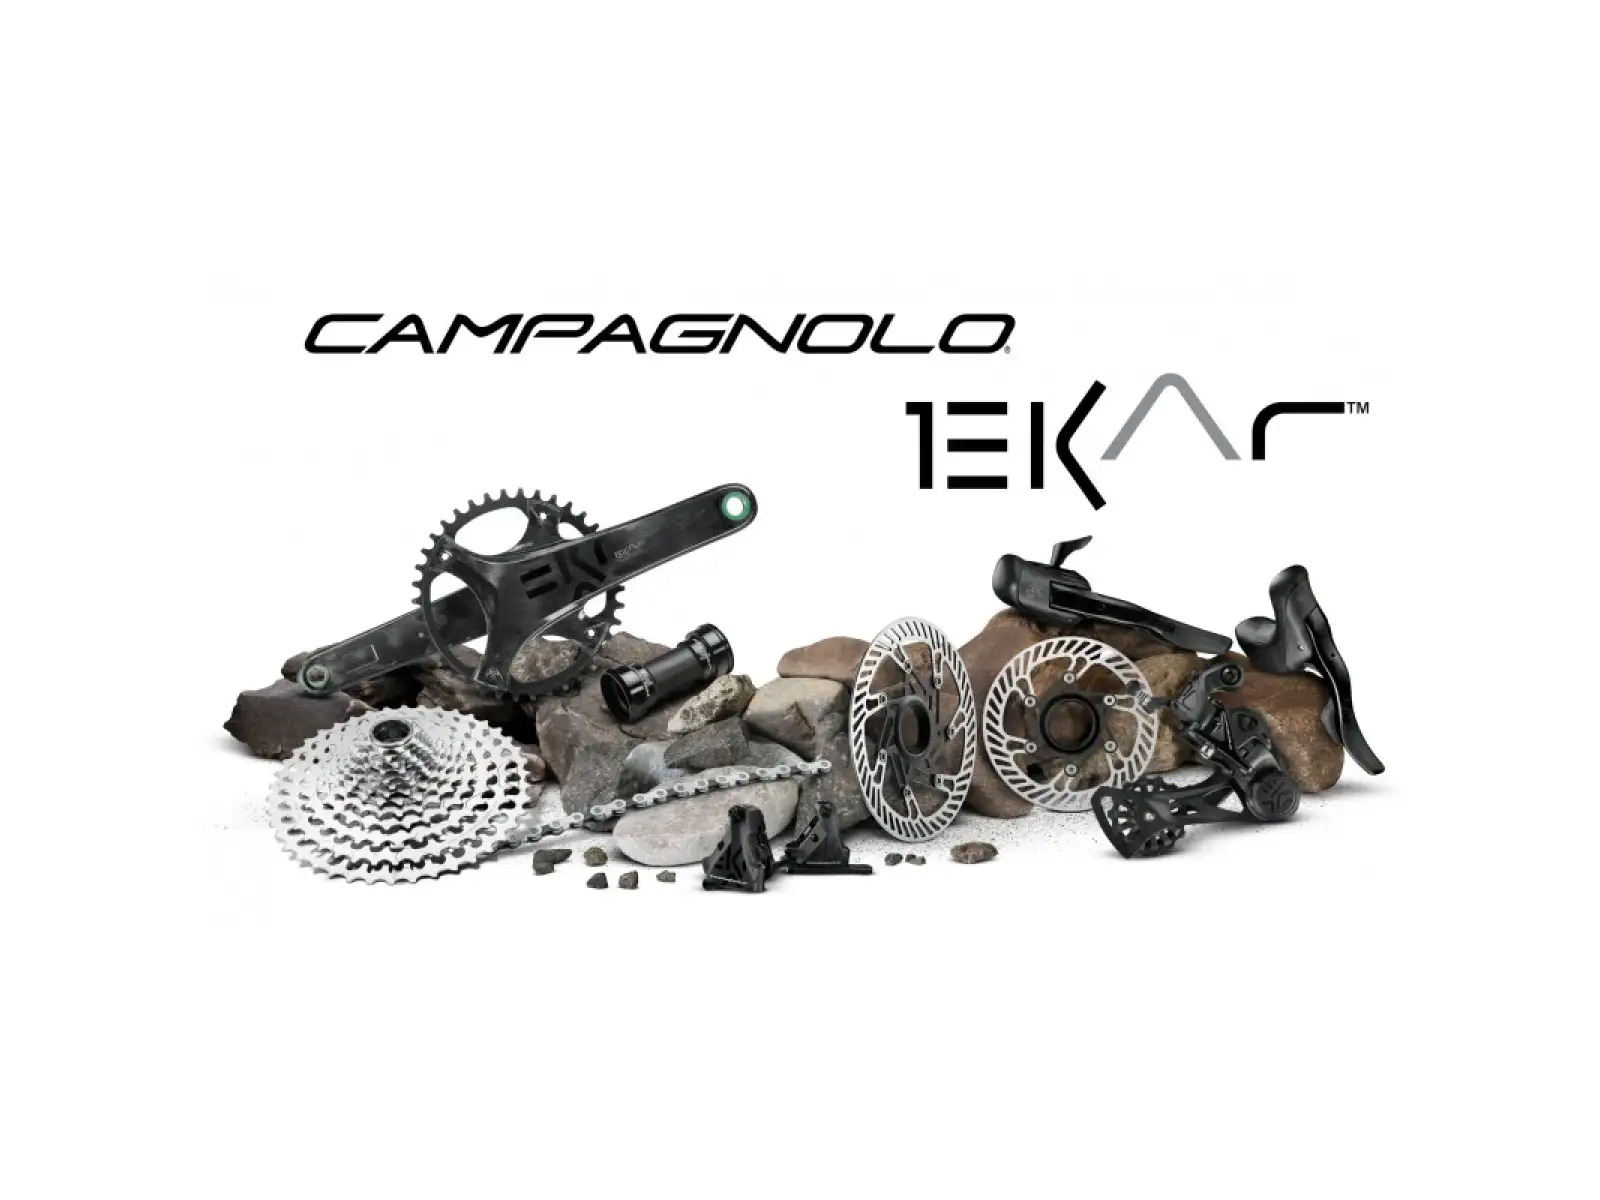 Campagnolo Ekar DB 1x13 gravel set 175mm/44 zubov